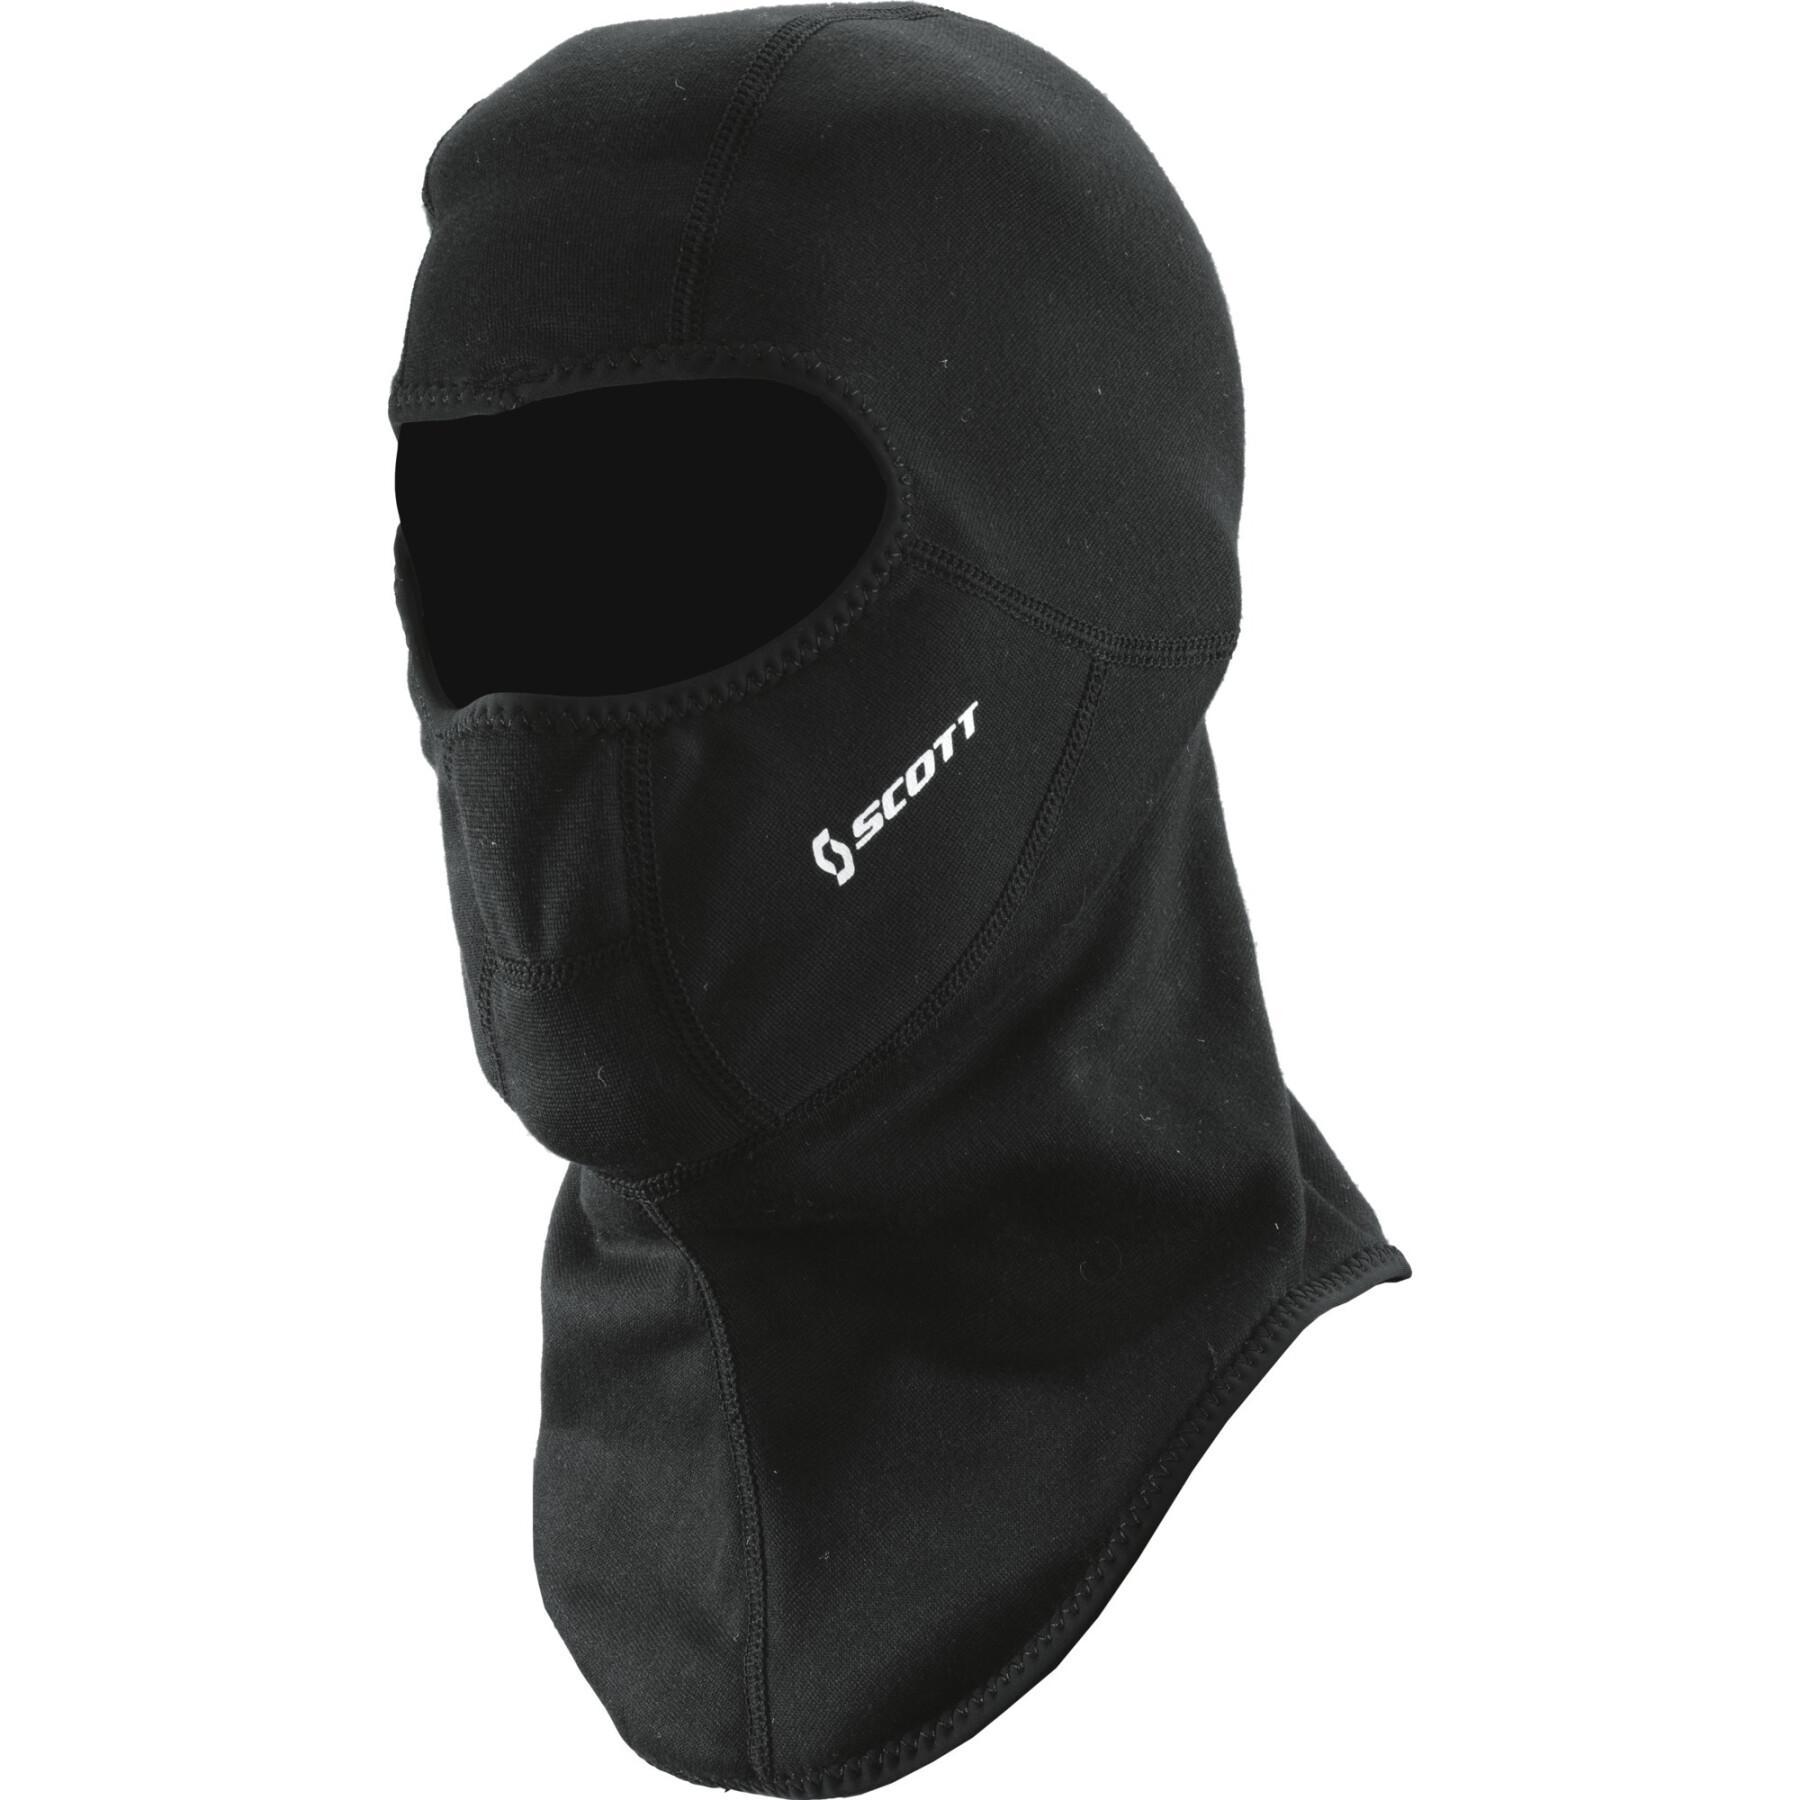 Open hood with face mask Scott